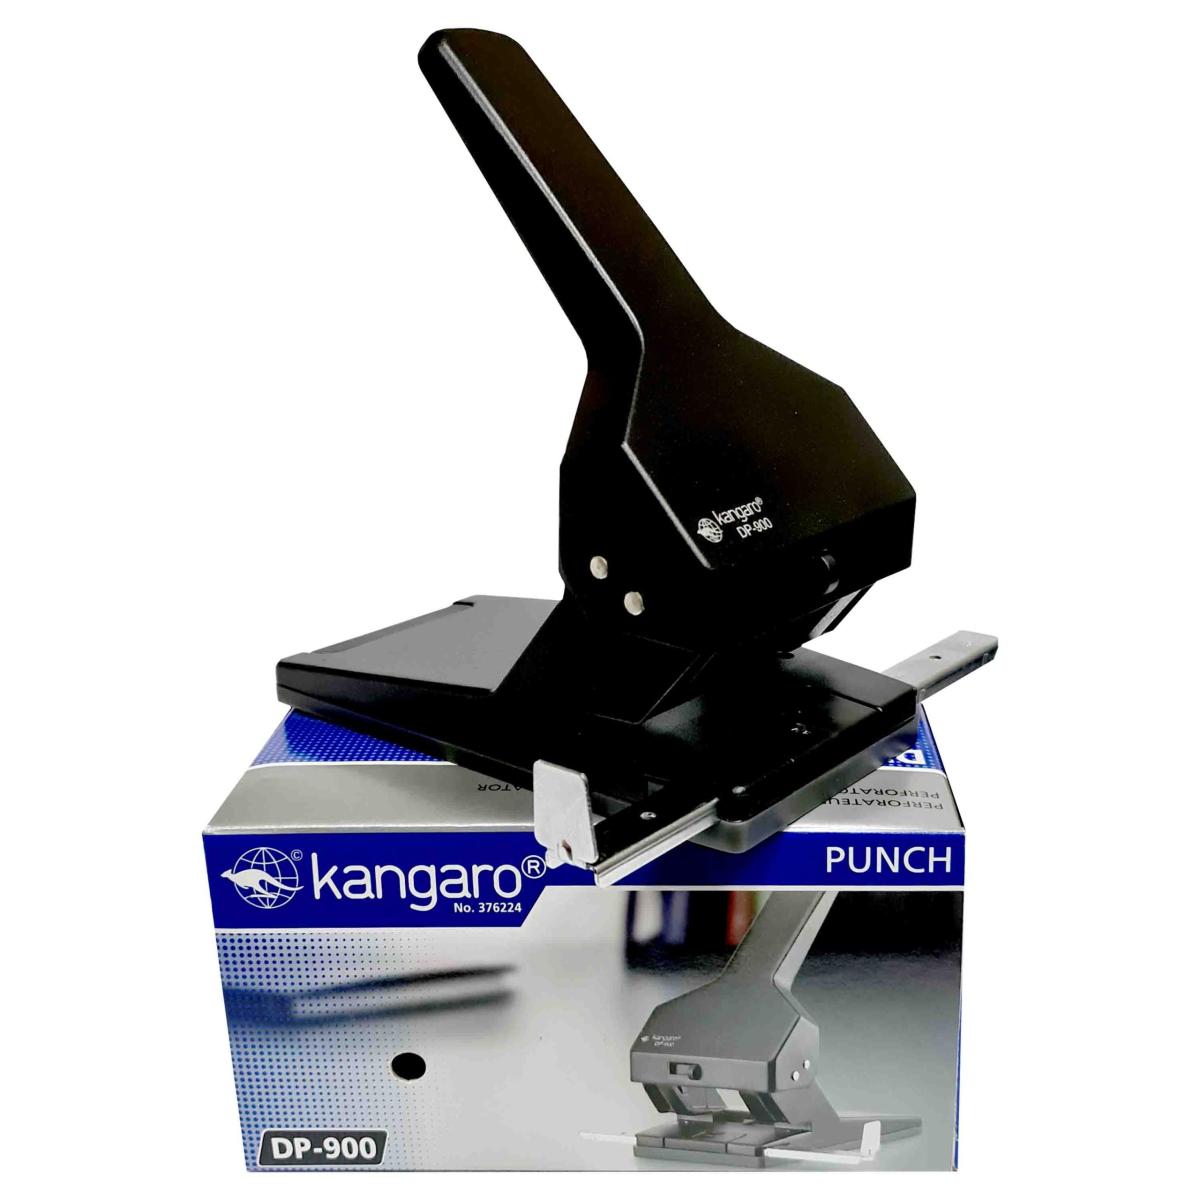 Kangaro 2 Hole Puncher DP-900, 65 Sheets Capacity, Assorted Colors